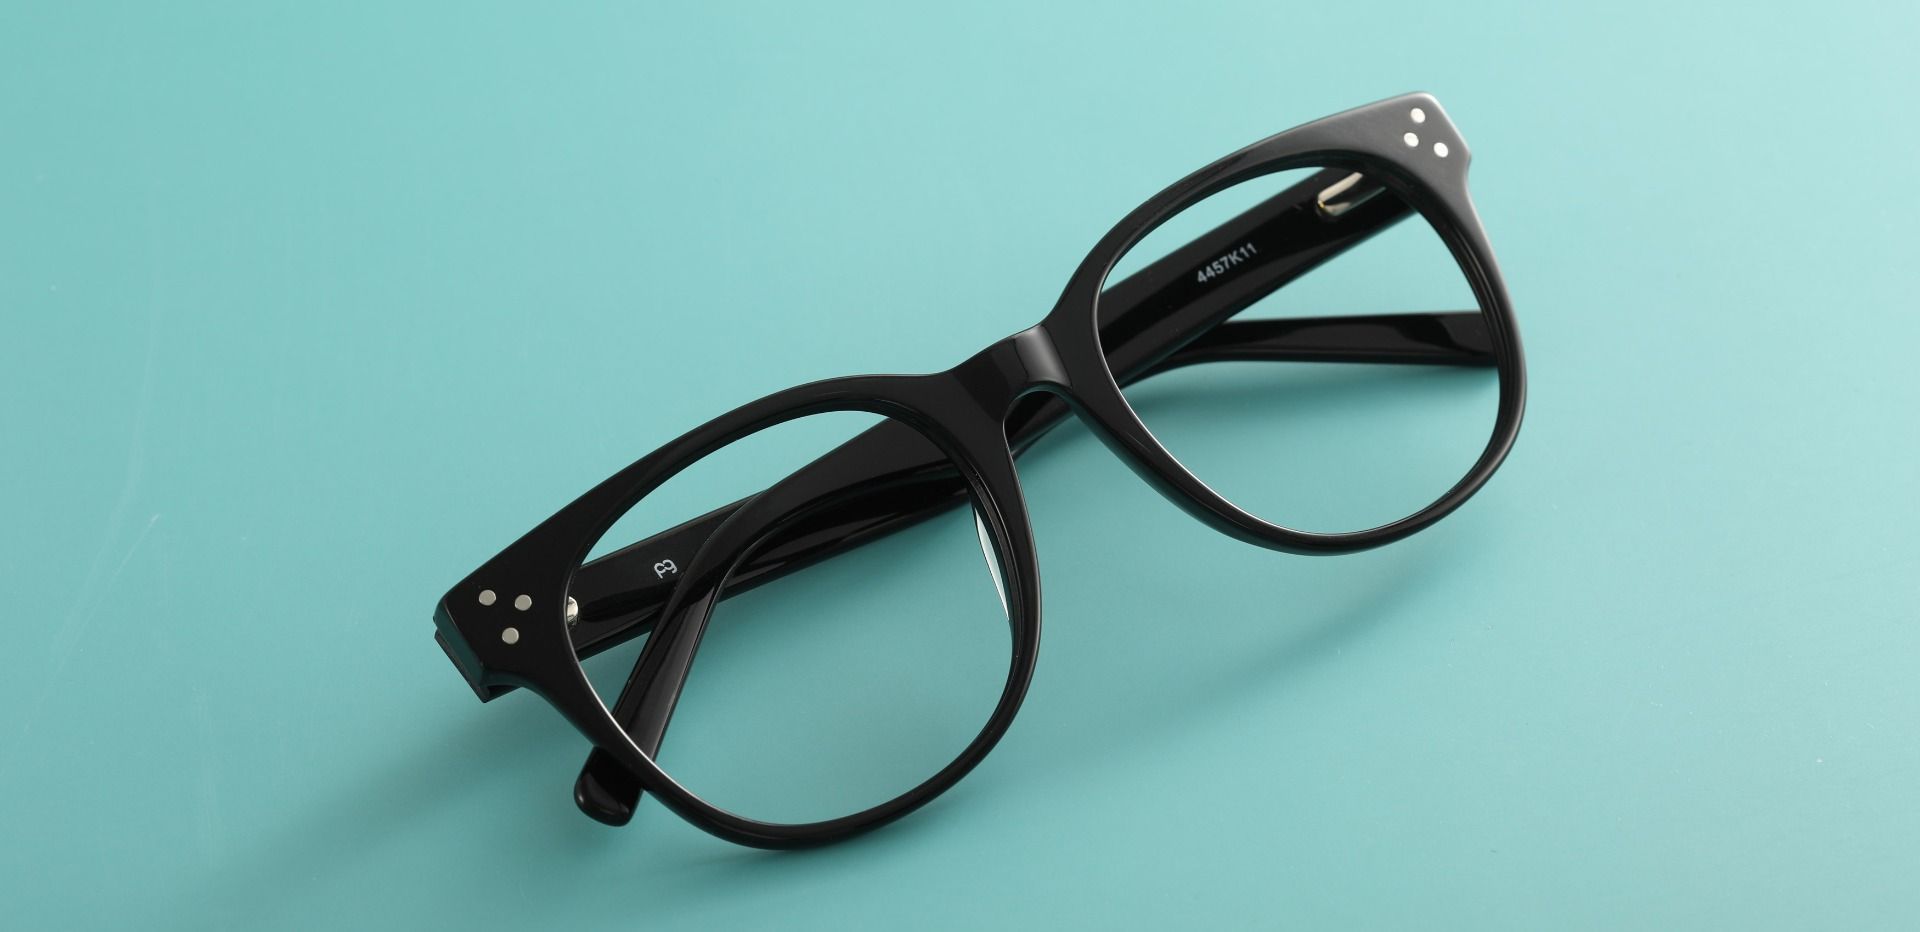 Orwell Oval Progressive Glasses - Black